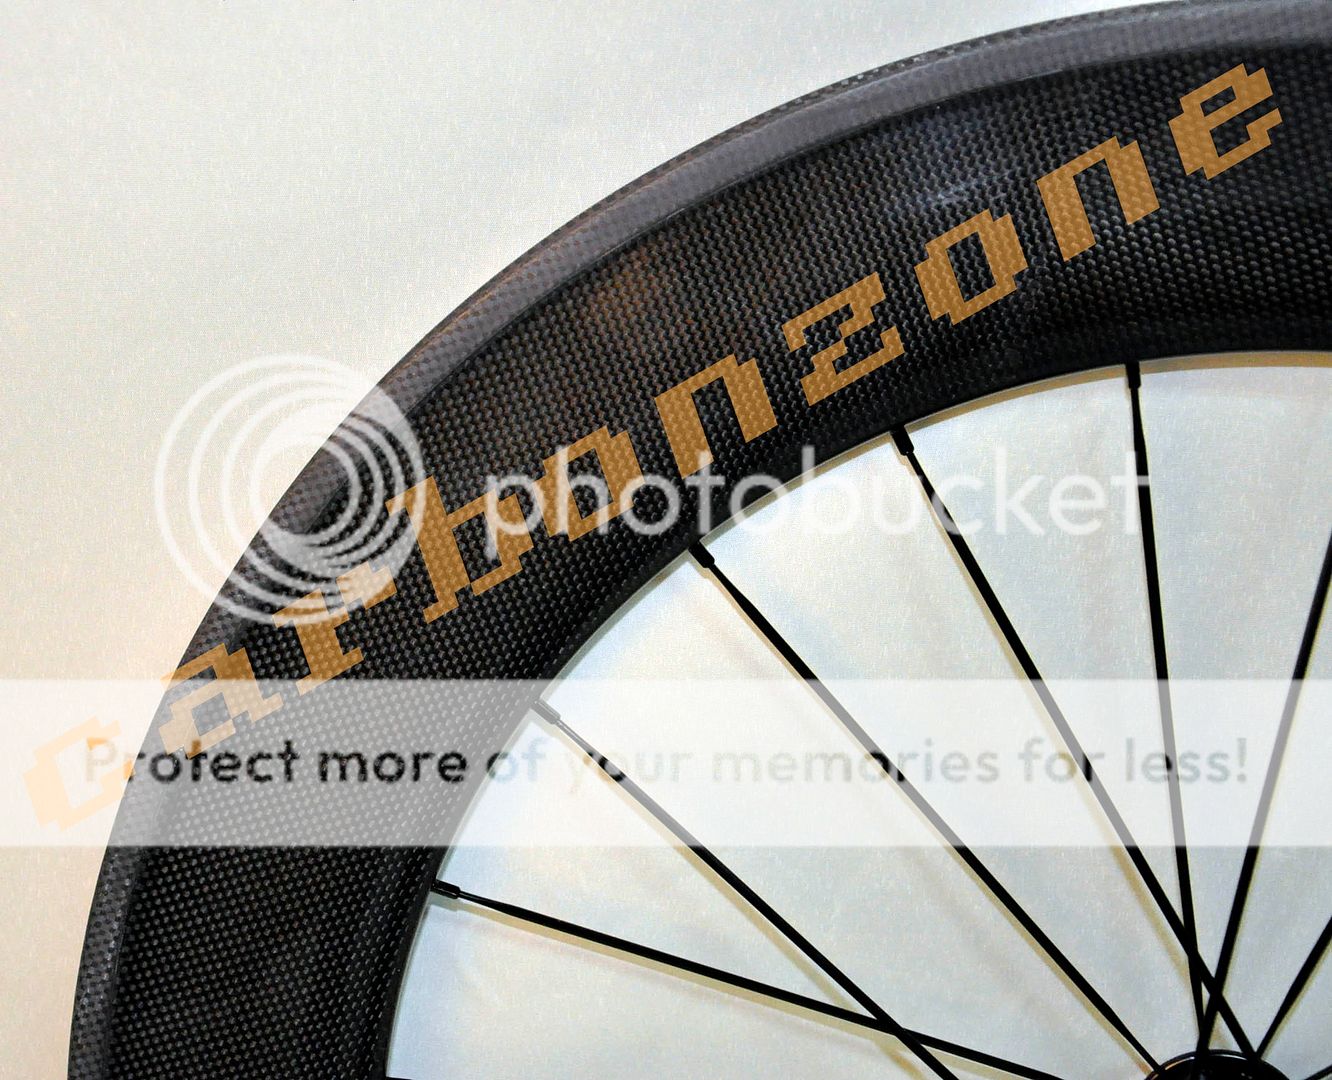 86mm 700c Carbon Tubular Rear Wheels for Road TT Model Campagnolo